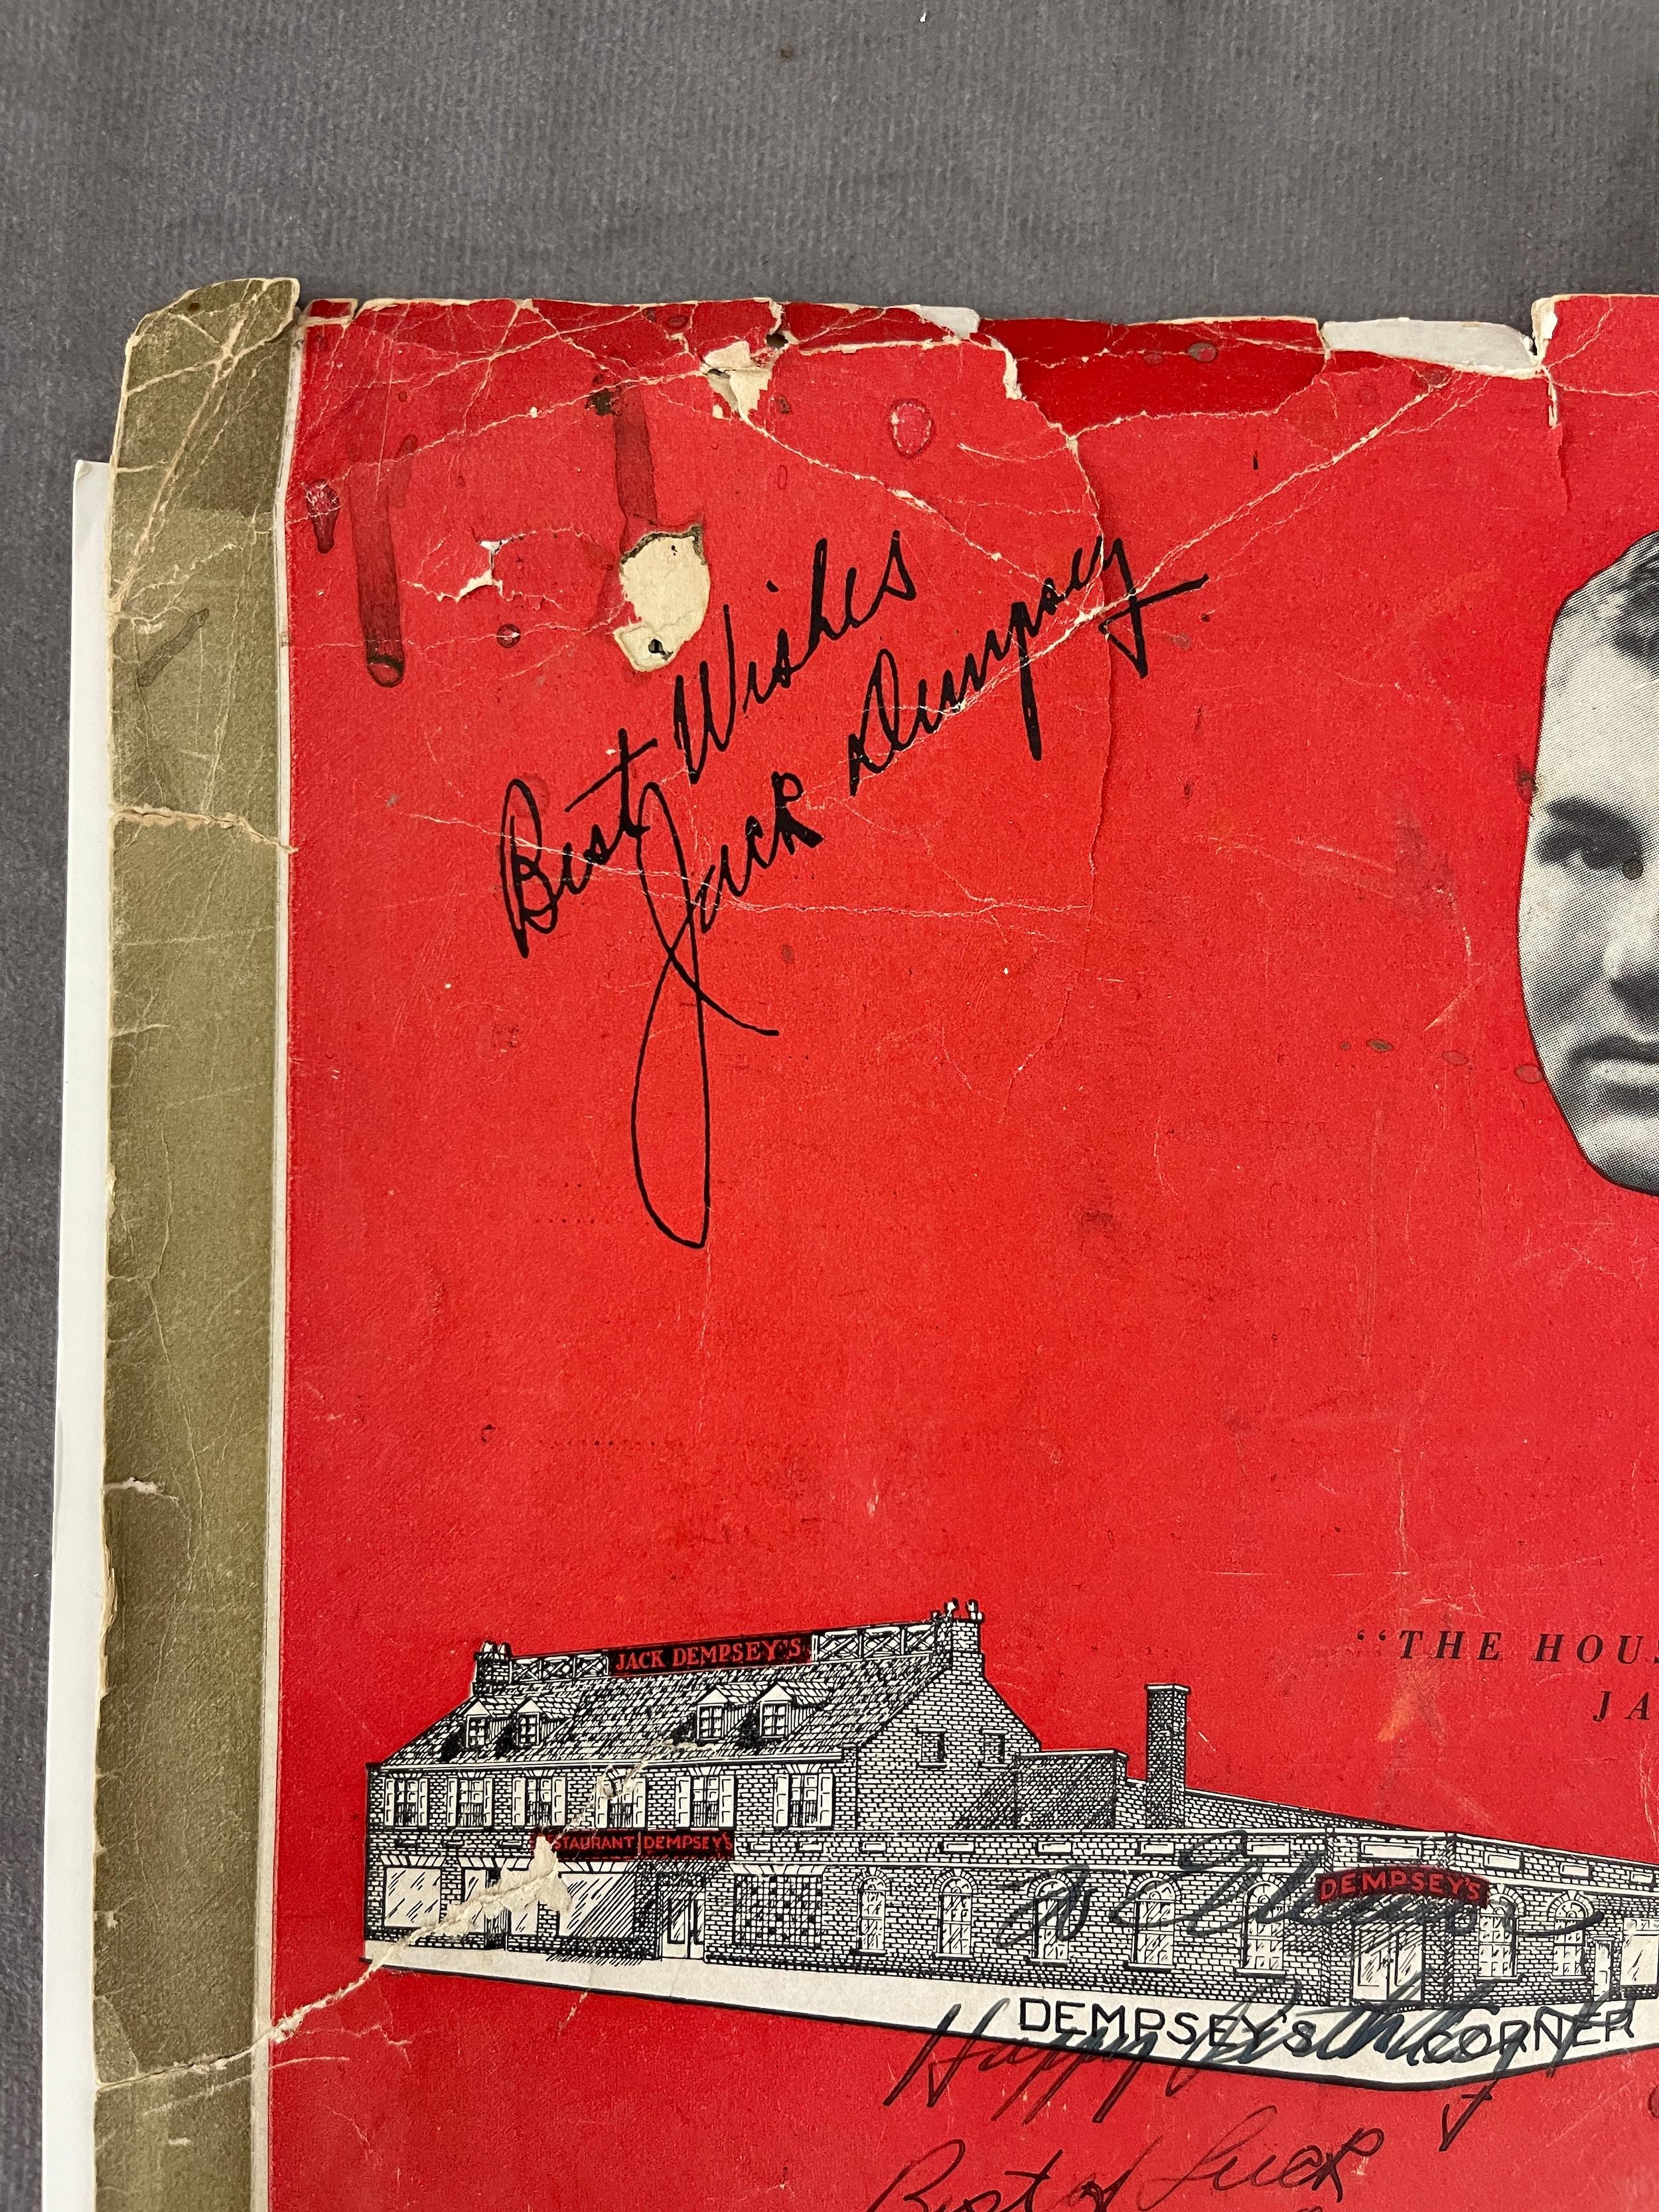 Jack Dempsey Boxer Boxing Signed Autograph Restaurant Menu (Cinderella Man)